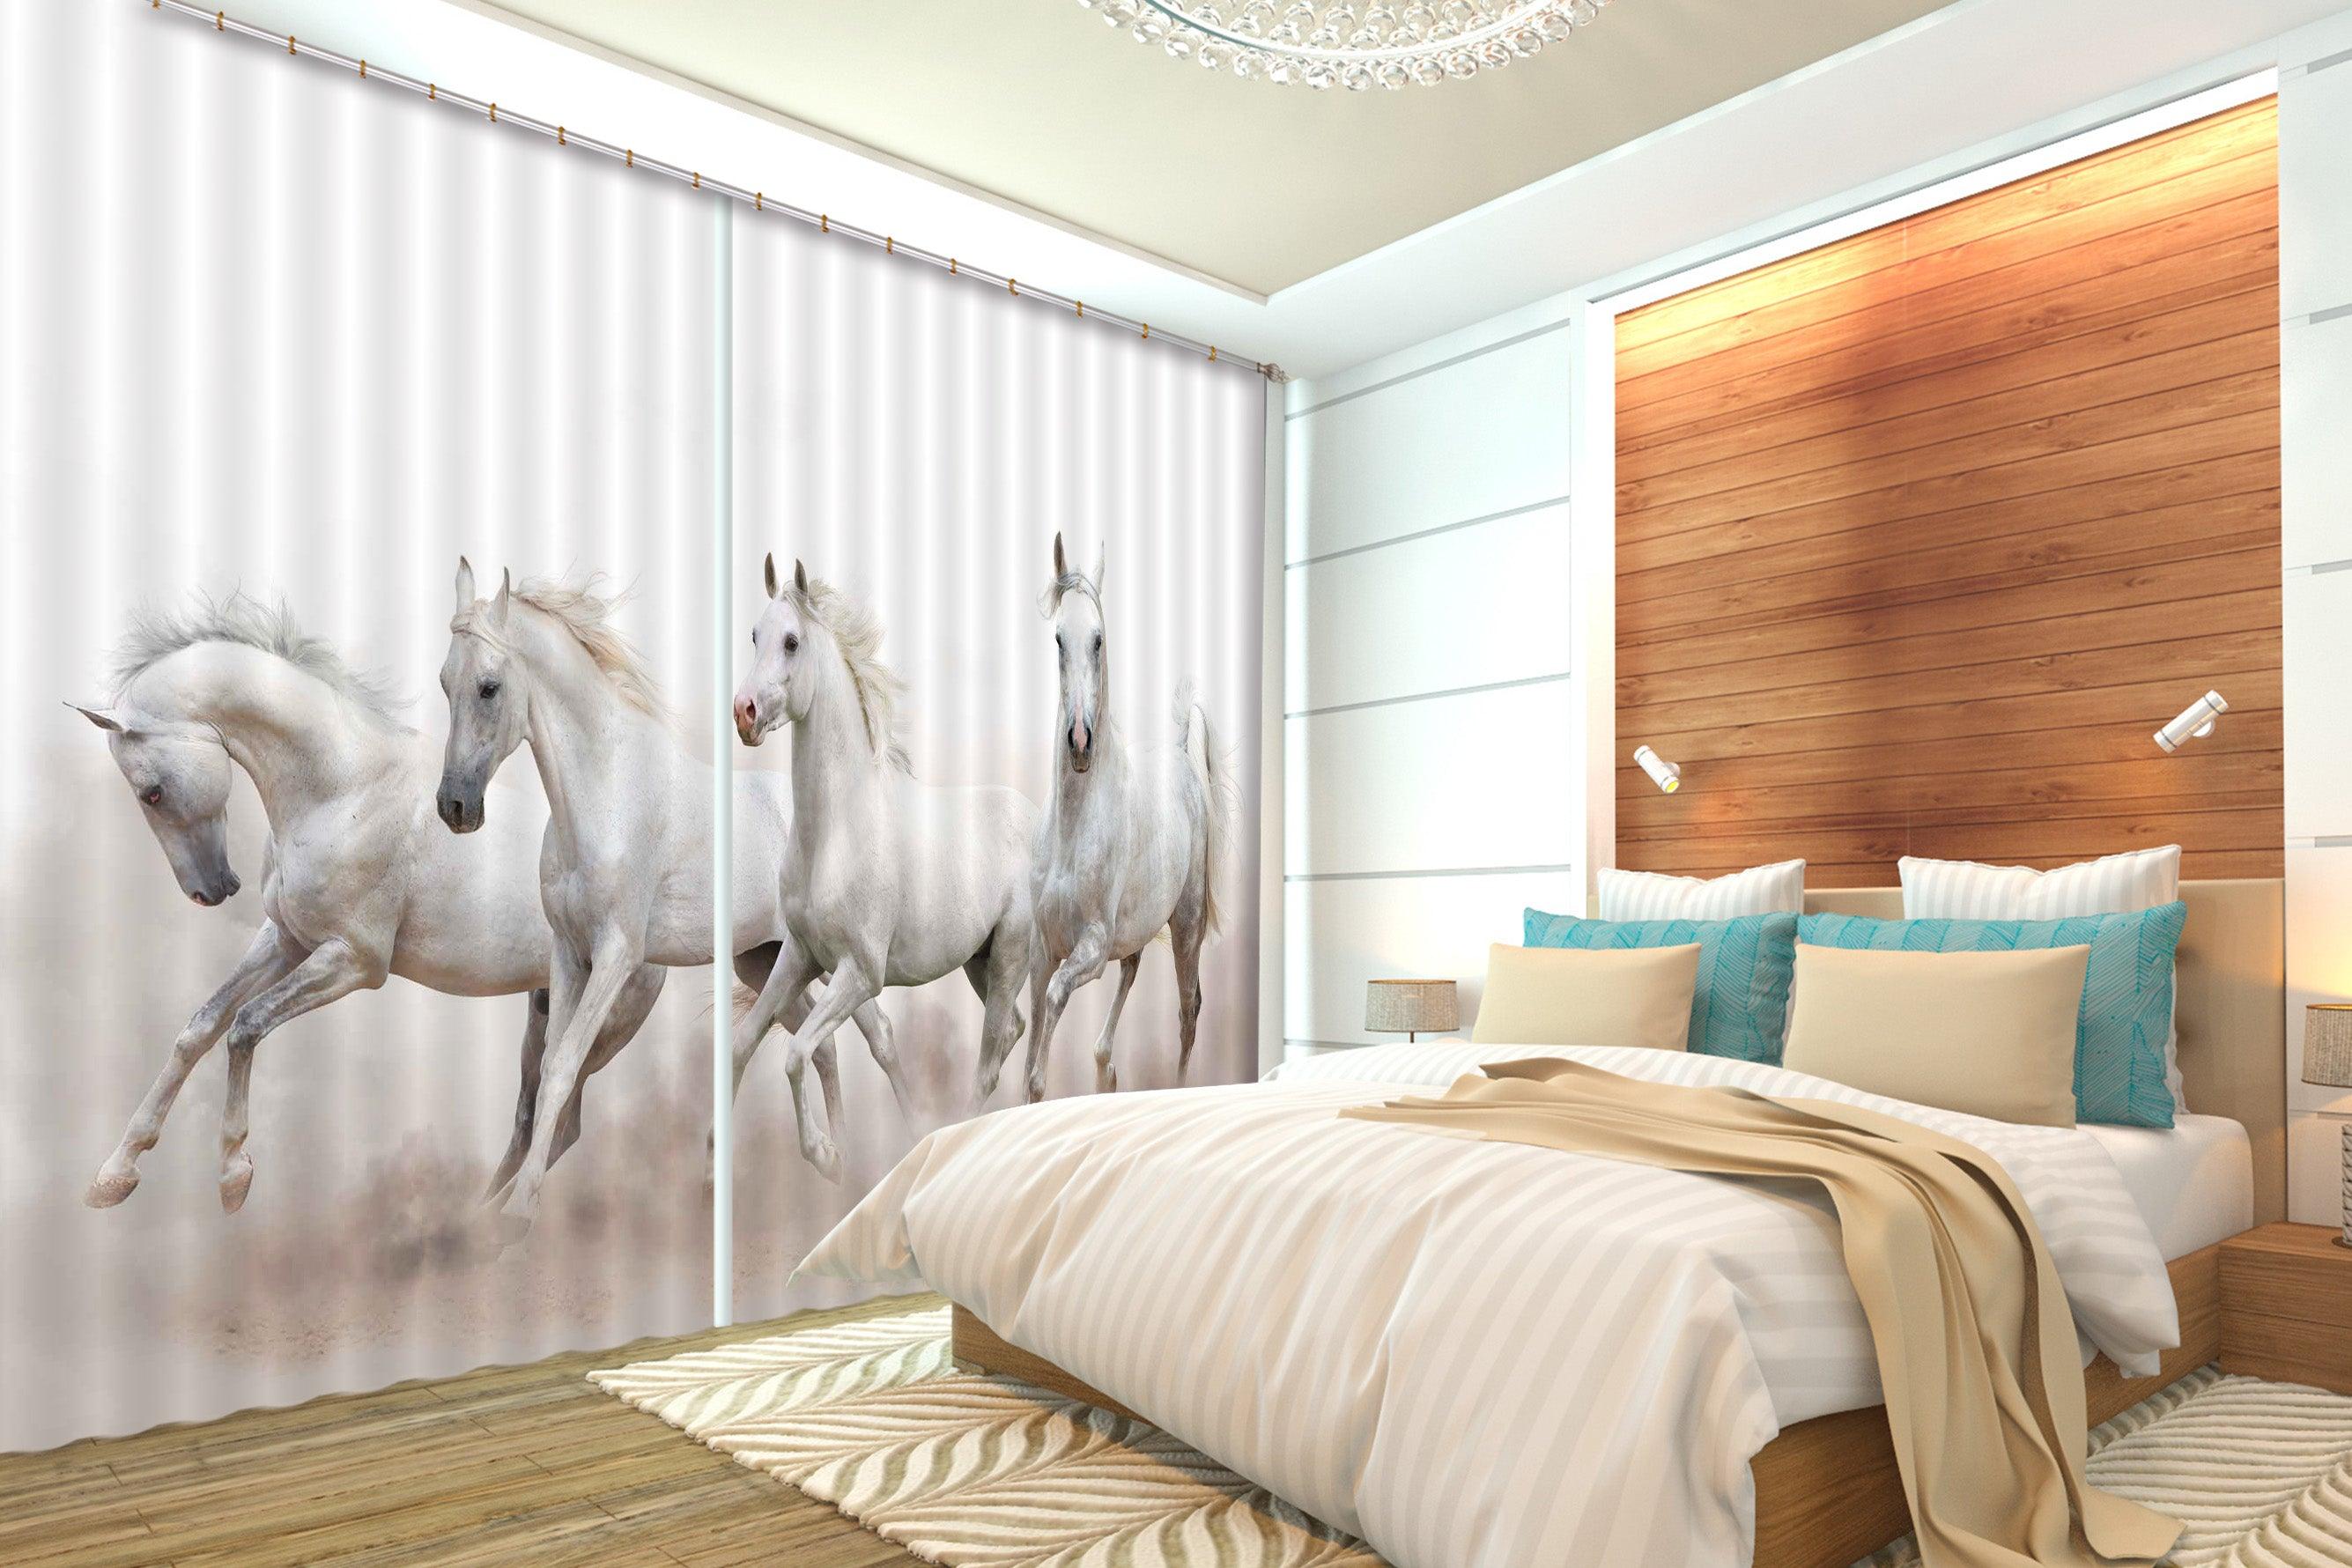 3D Pale Horses Curtains and Drapes LQH A384- Jess Art Decoration